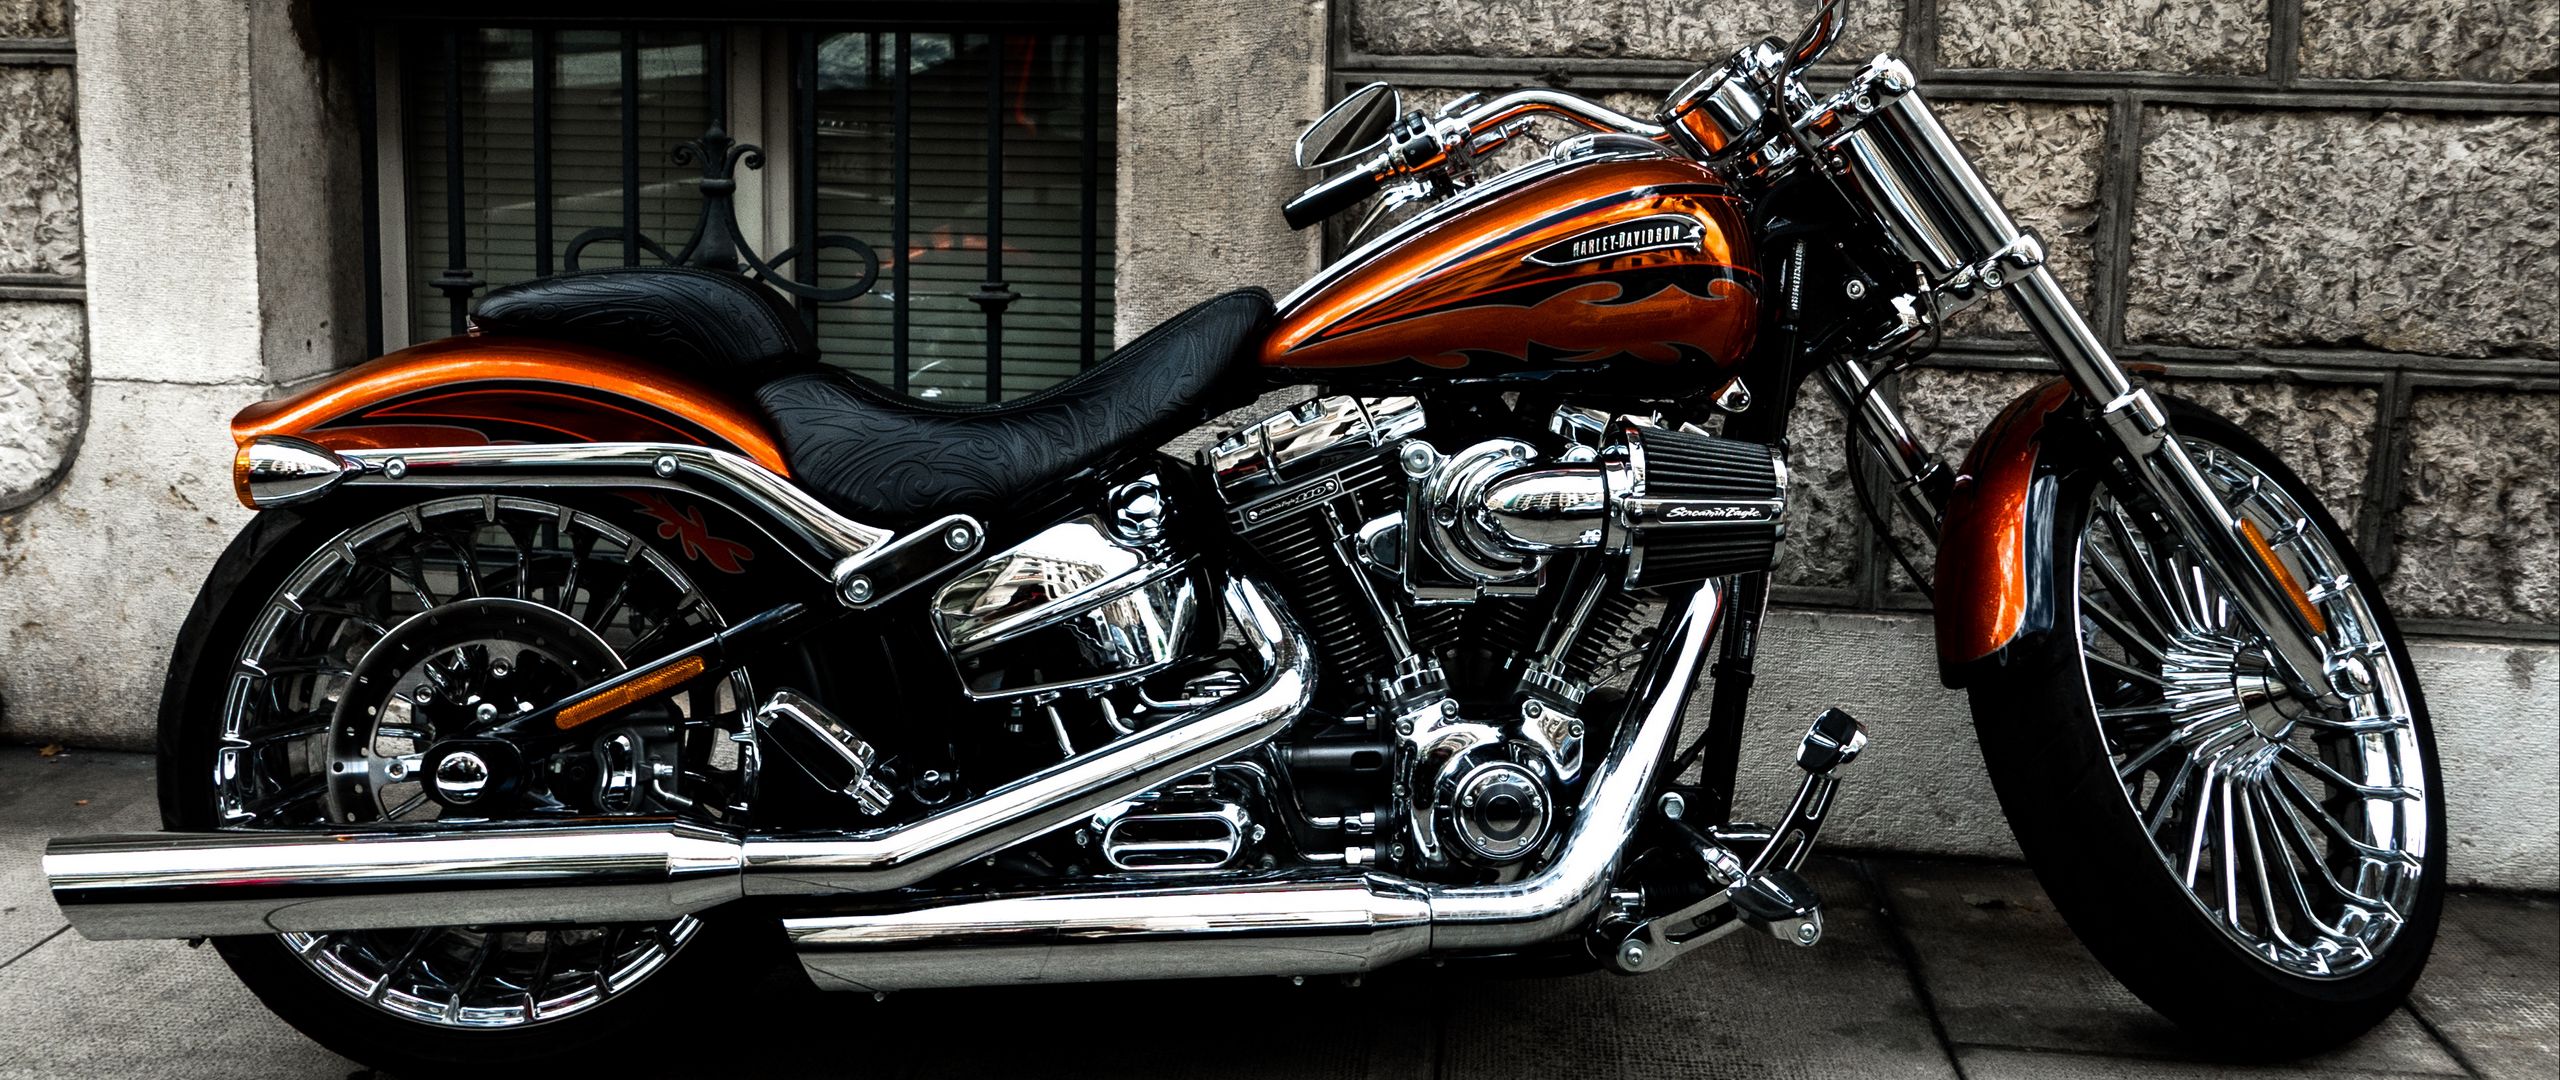 2560x1080 Wallpaper motorcycle, bike, side view, wheel